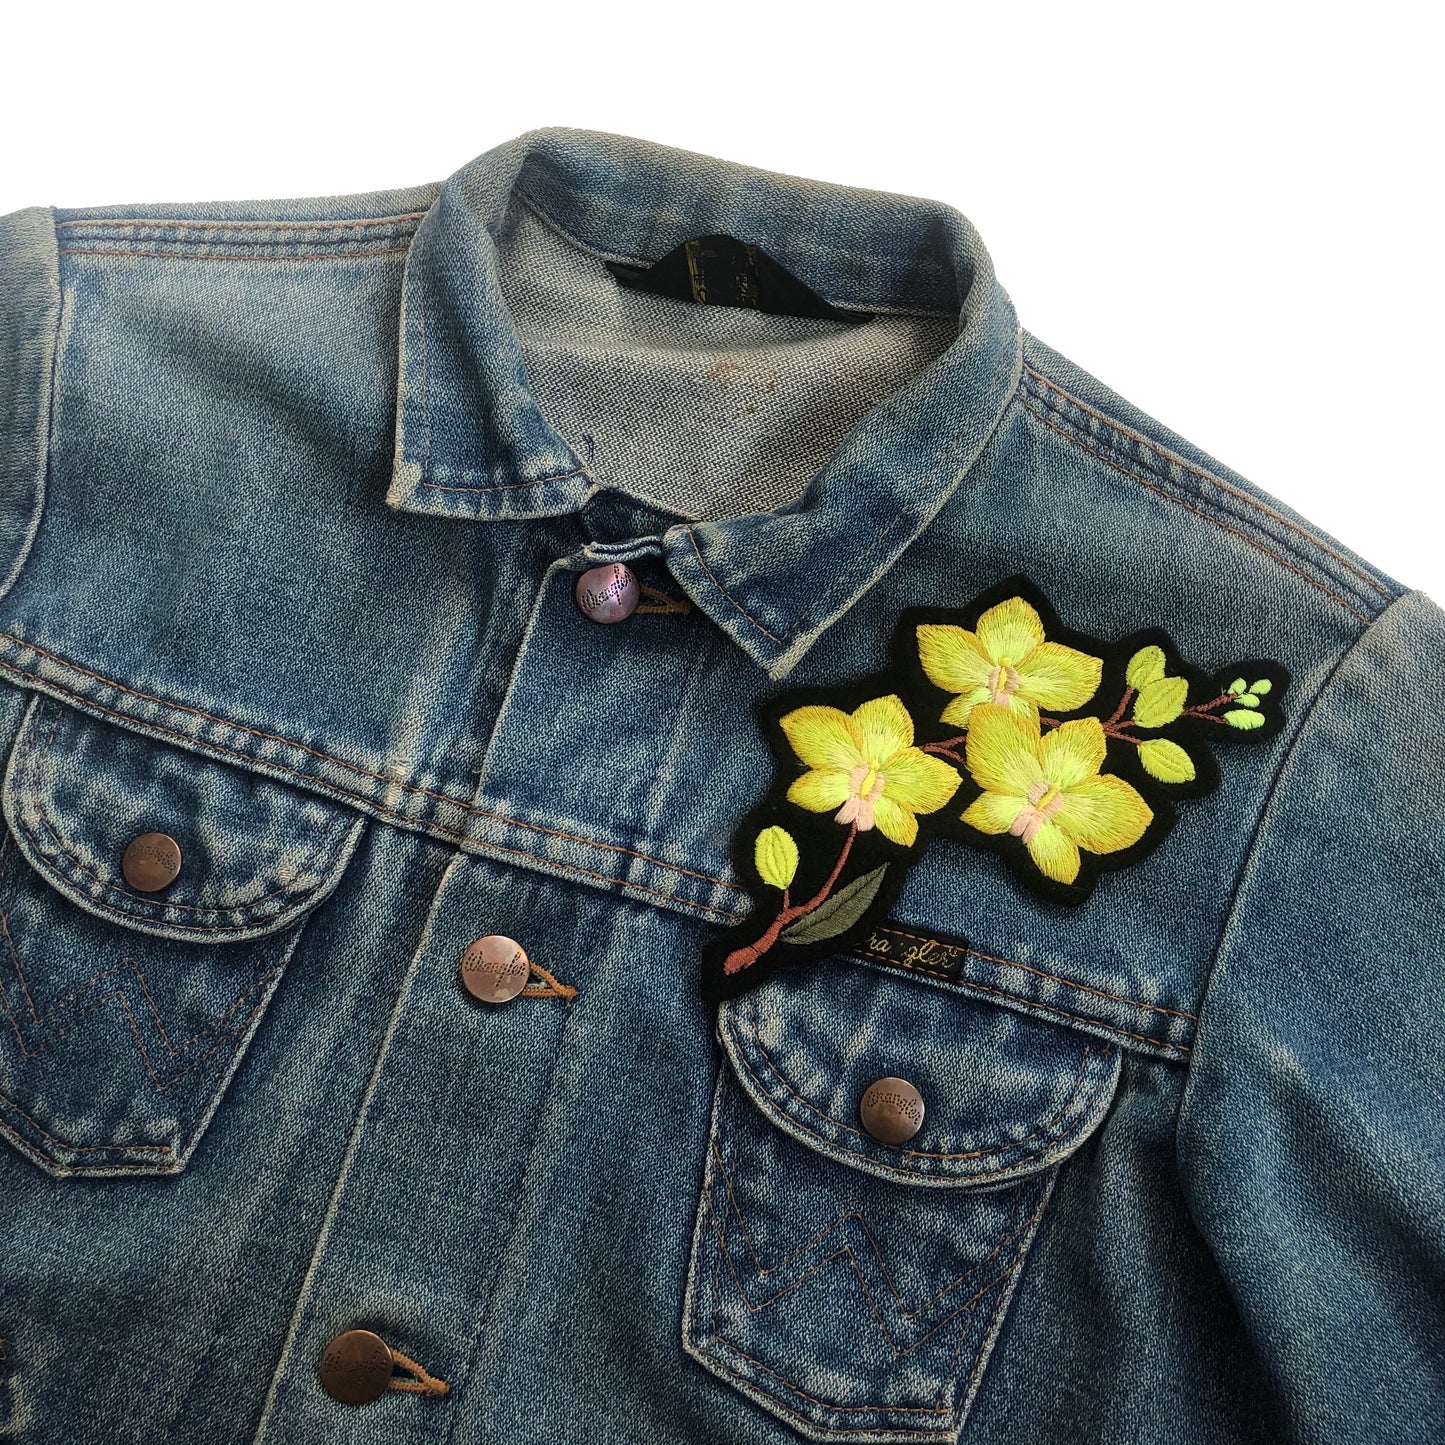 Orchid embroidered patch on front shoulder of blue denim jacket